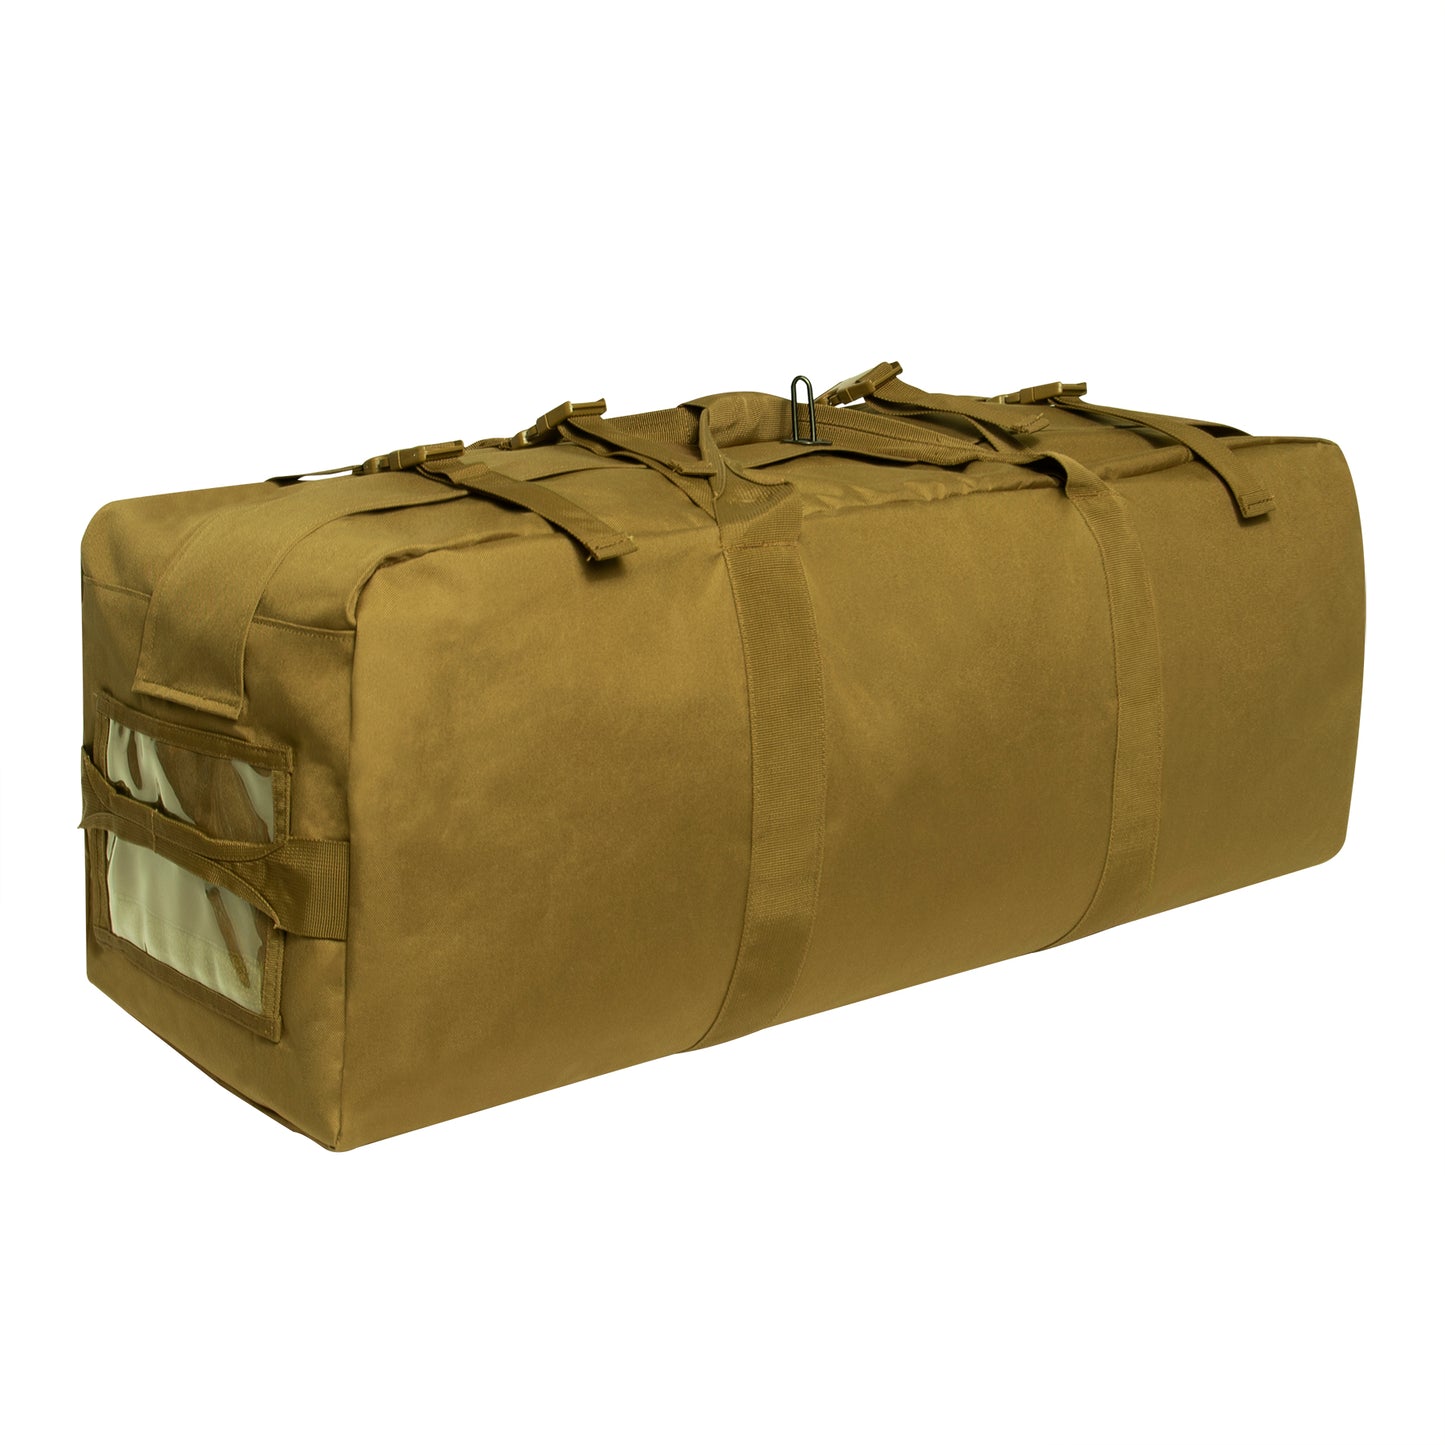 Milspec GI Type Enhanced Duffle Bag Nylon Duffle Bags MilTac Tactical Military Outdoor Gear Australia